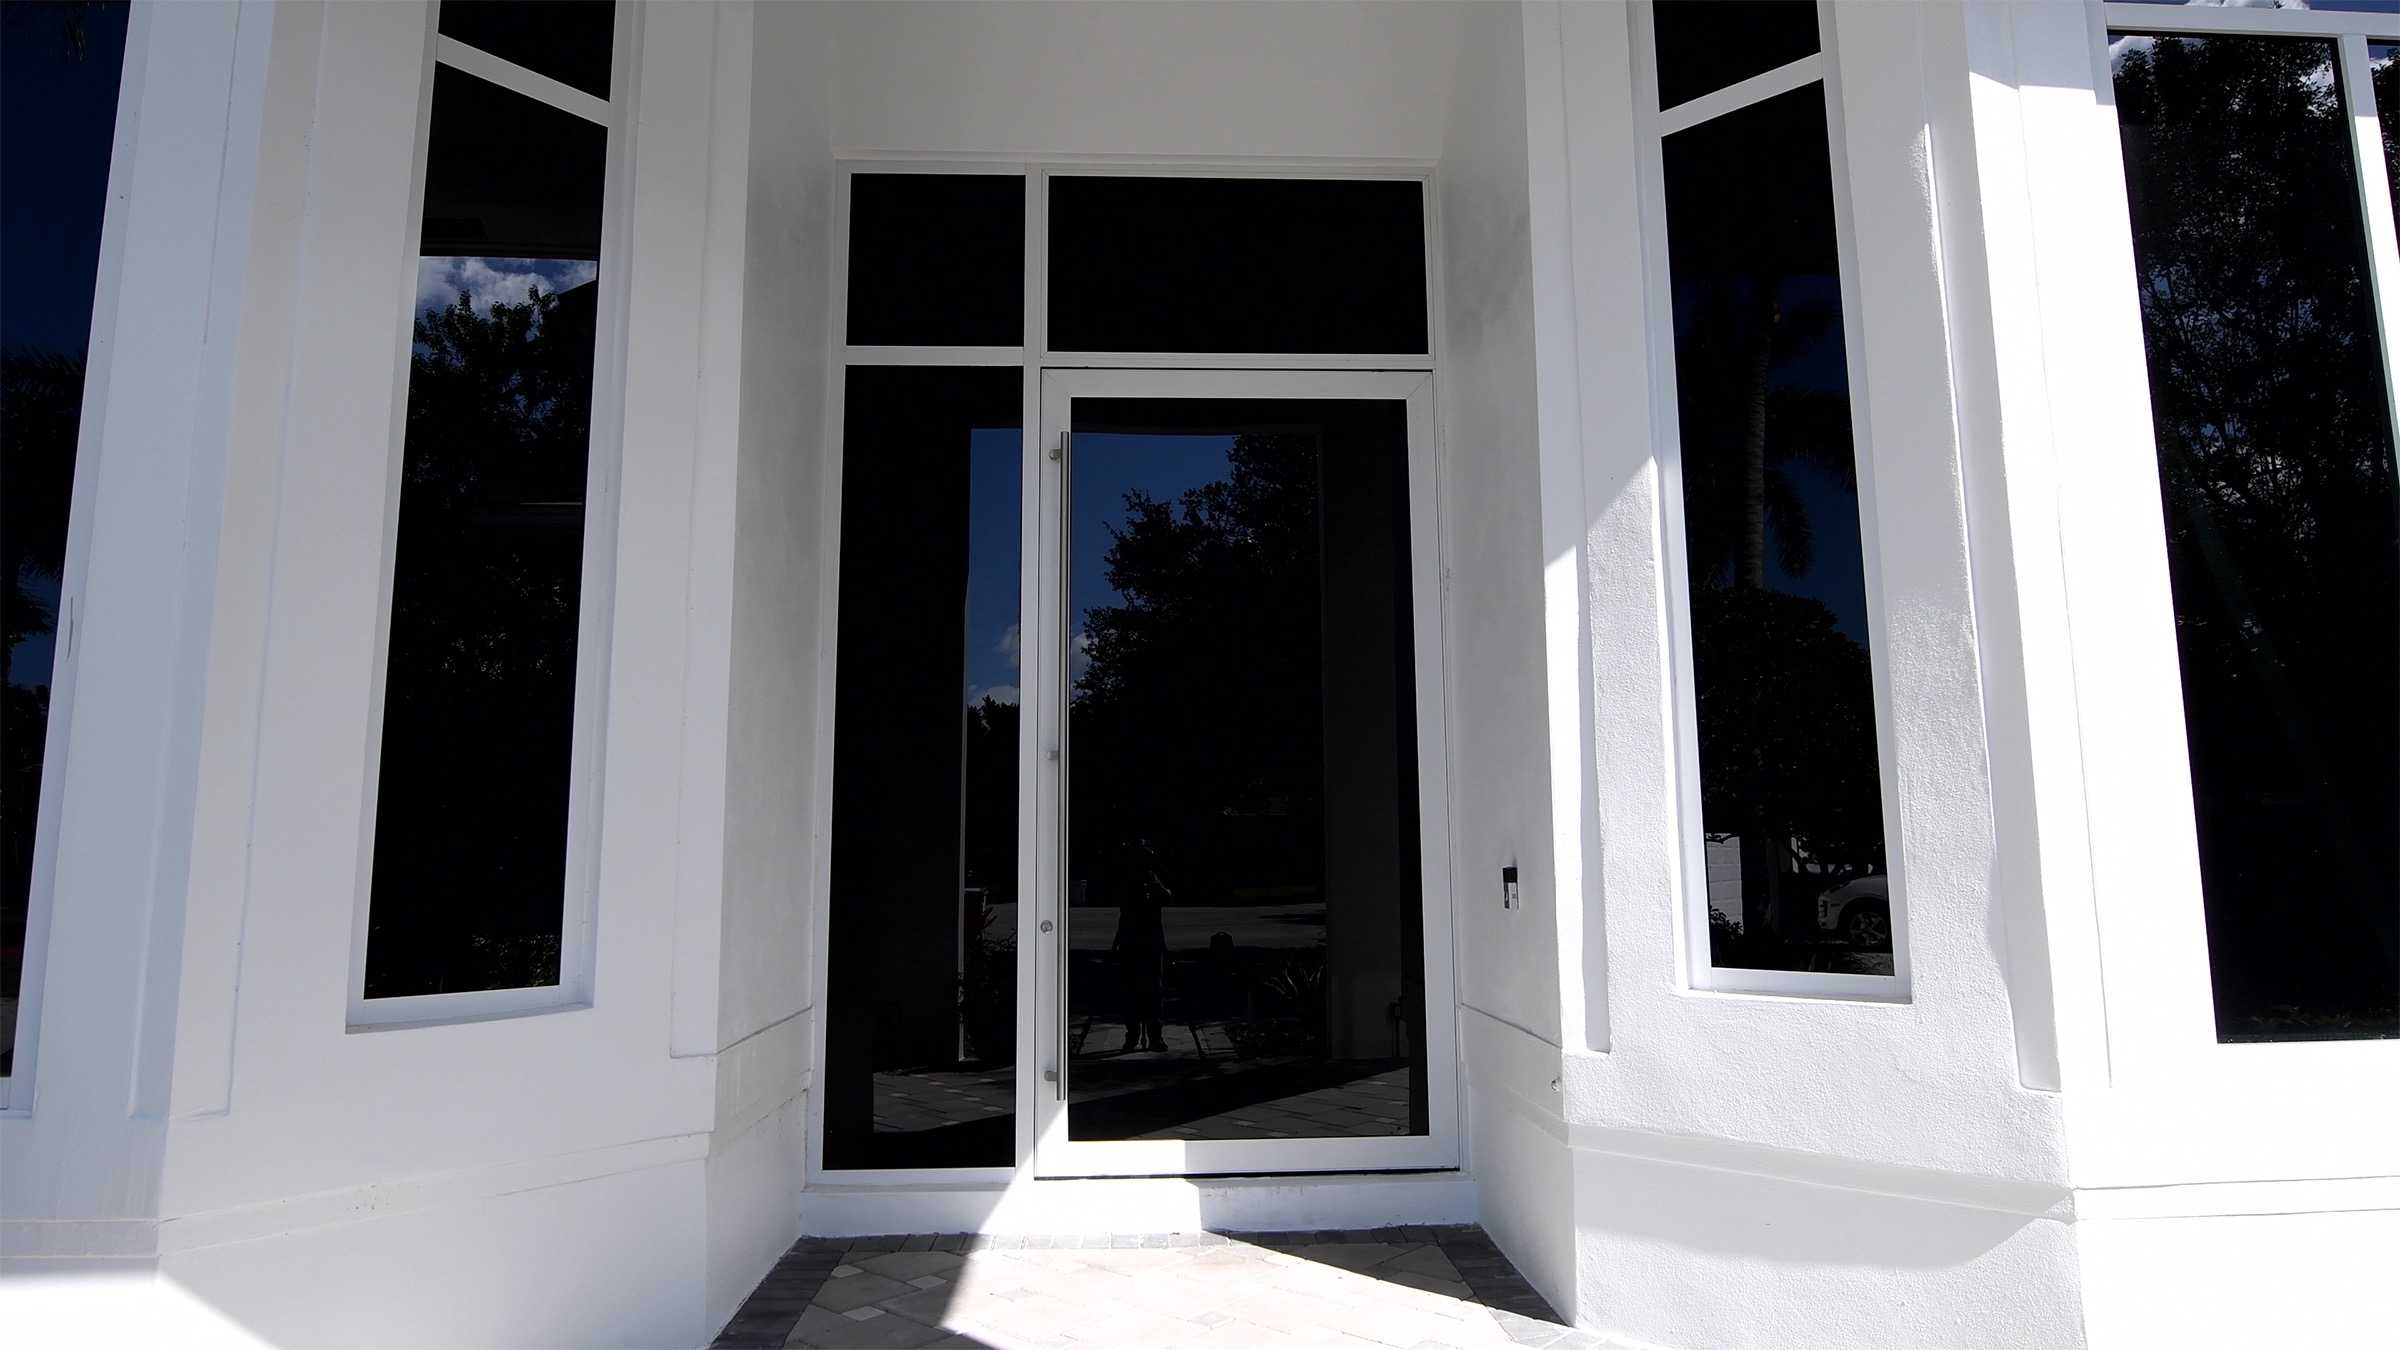 exterior door and windows of house